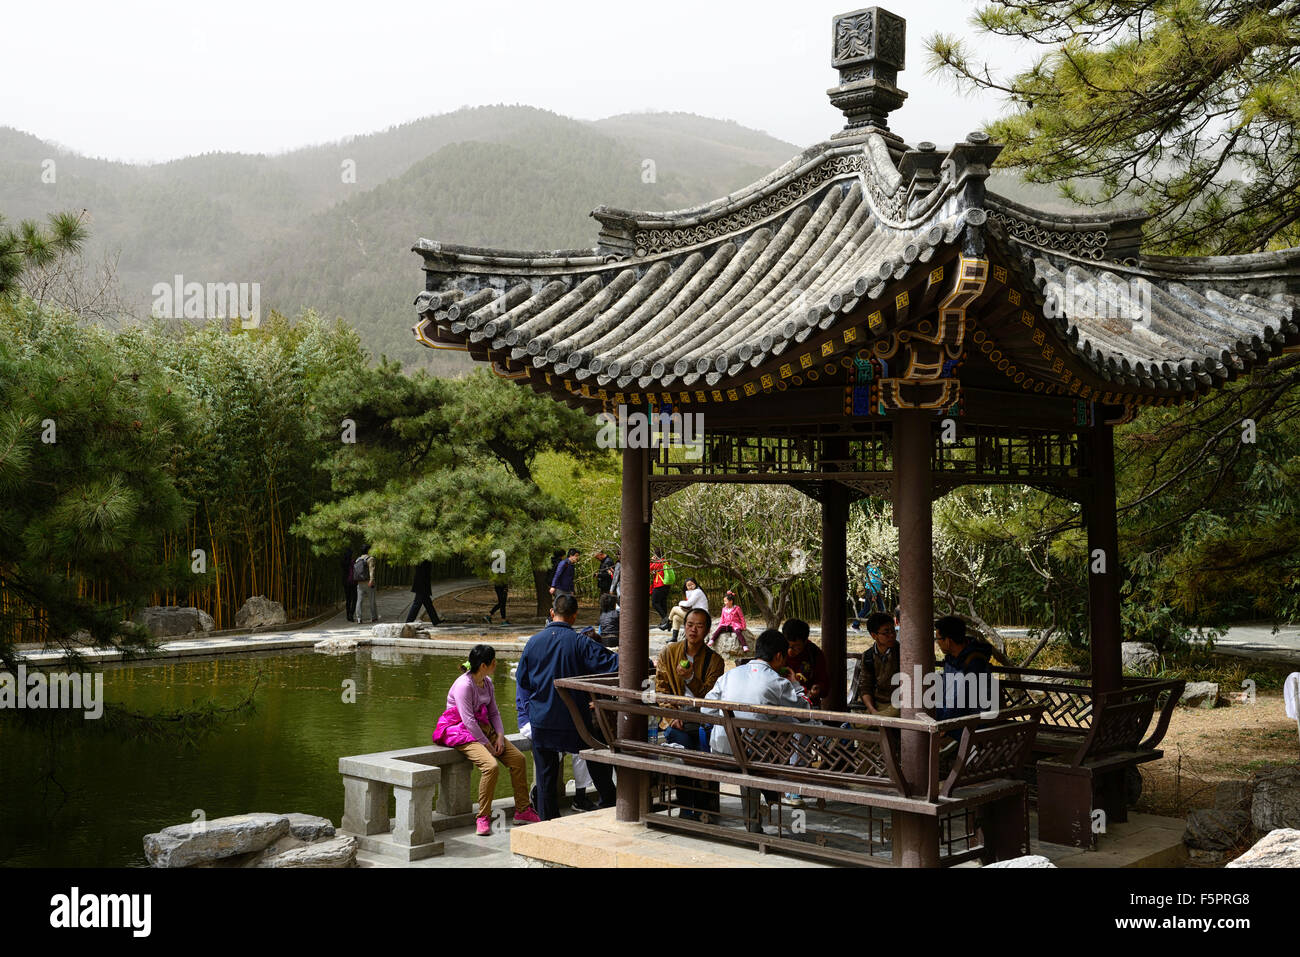 Wooden pagoda picnic area lake Beijing Botanical Gardens Garden China Spring RM Floral Stock Photo